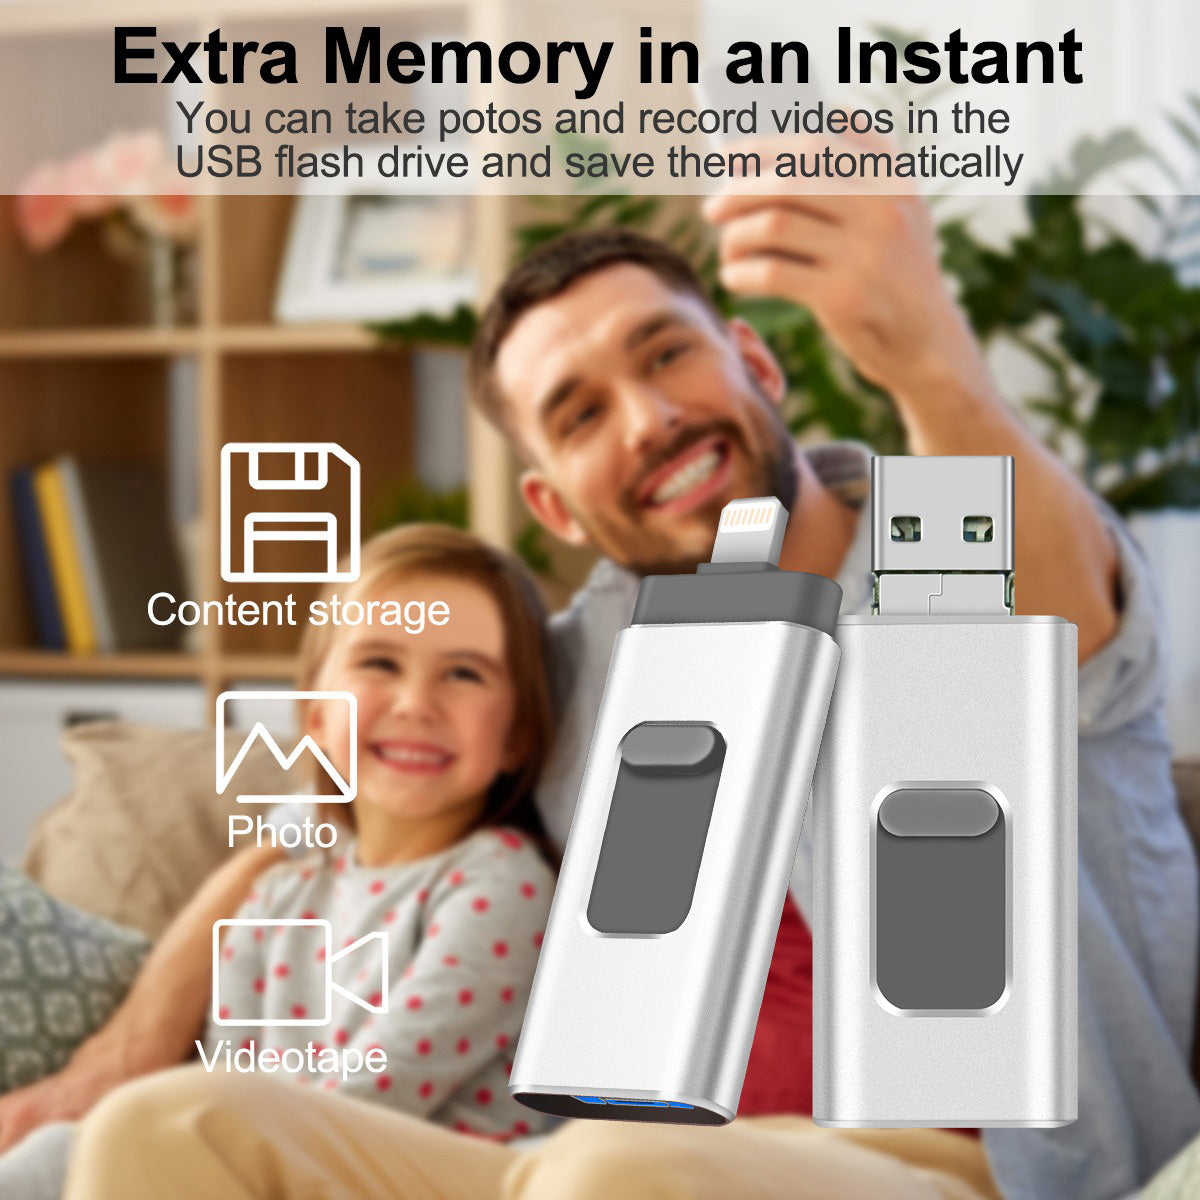 Uniqkart R-01B 32GB USB Memory Stick for iPhone Android PC, Portable USB 3.0 Flash Drive Thumb Drive Photo Stick - Silver